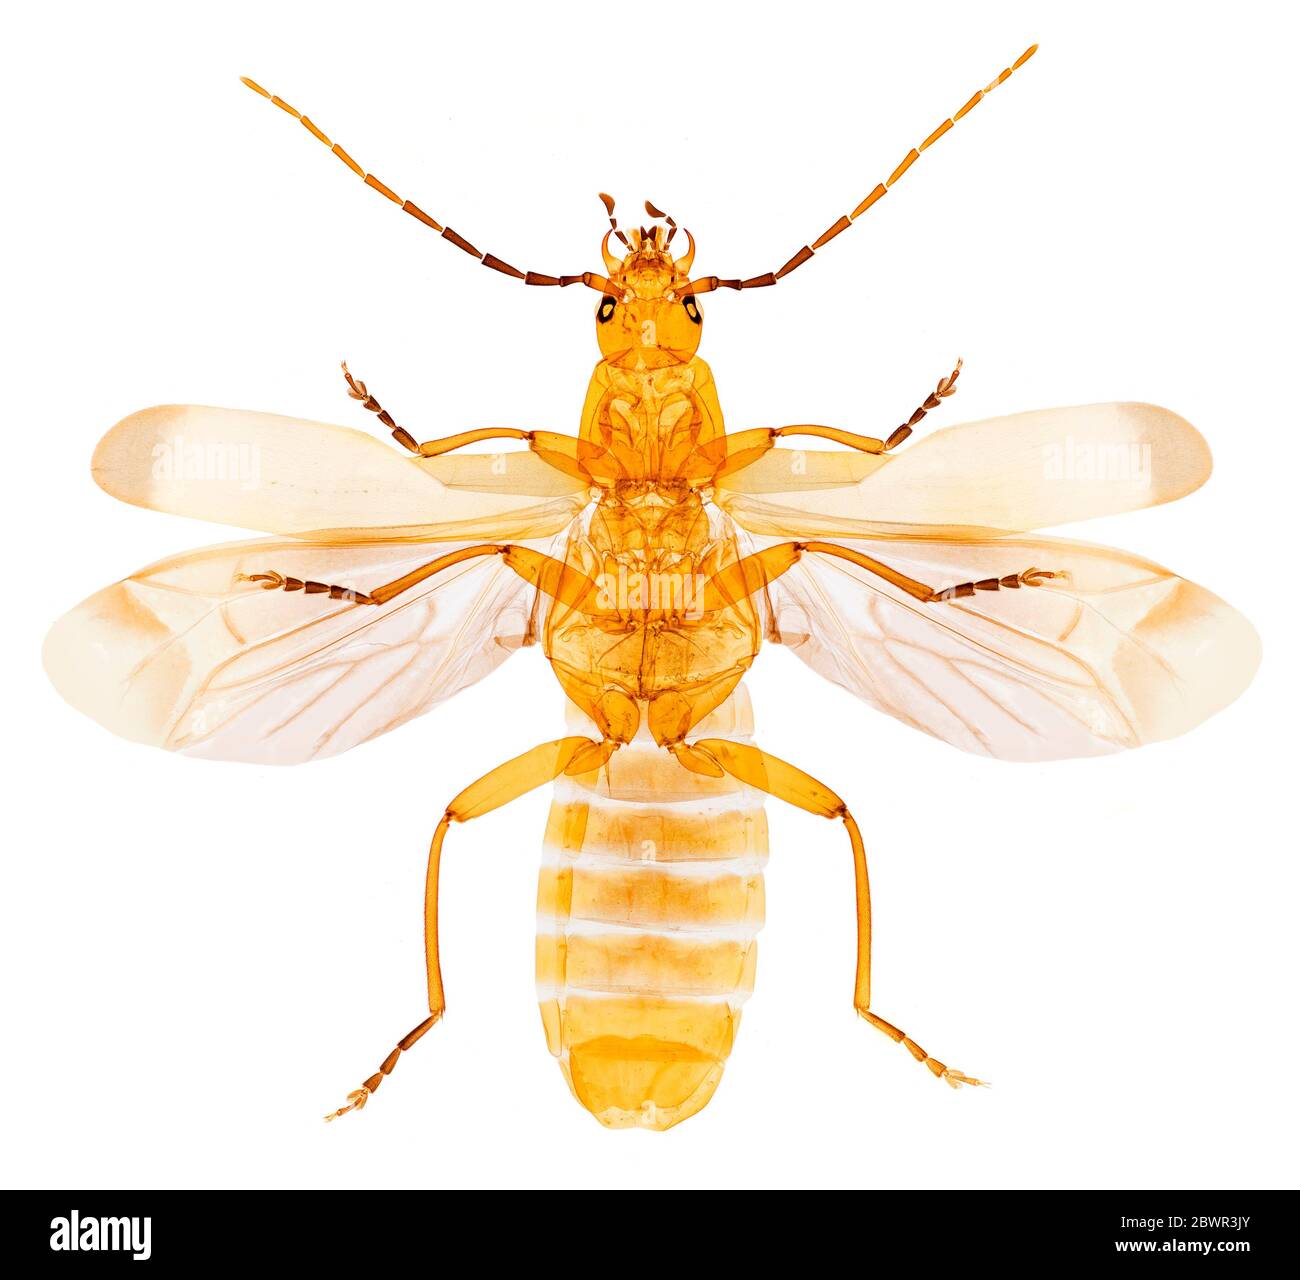 Soldier beetle, Cantharis livida, brightfield photomicrograph Stock Photo